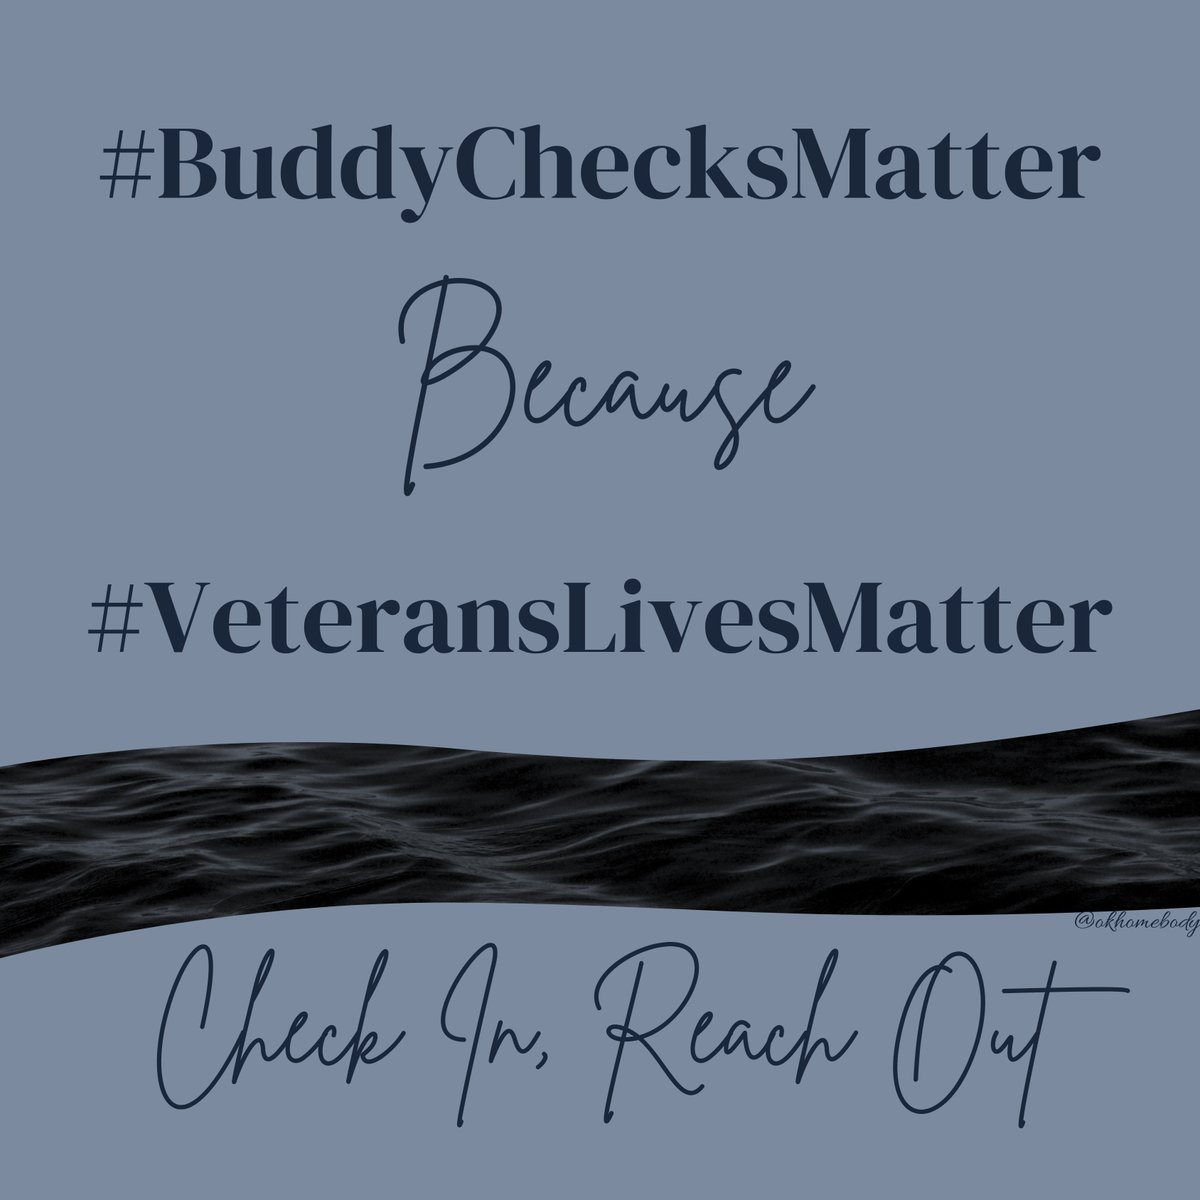 🇺🇸 #WarriorWednesday #Buddy✅with #Veterans 🙏RH
❤️#BuddyChecksMatter because #VeteransLivesMatter❤️
⭐️ 🇺🇸 Repost #EndVeteranSuicide #dial988press1 🇺🇸⭐️
🇺🇸 @DorianHoward @RightVet23 @abot_no @coheley⚓️
🇺🇸@TomSporty05 @Phat_Greek @MassPatriot1775⚓️
🇺🇸@JackTambroni @JimG65…